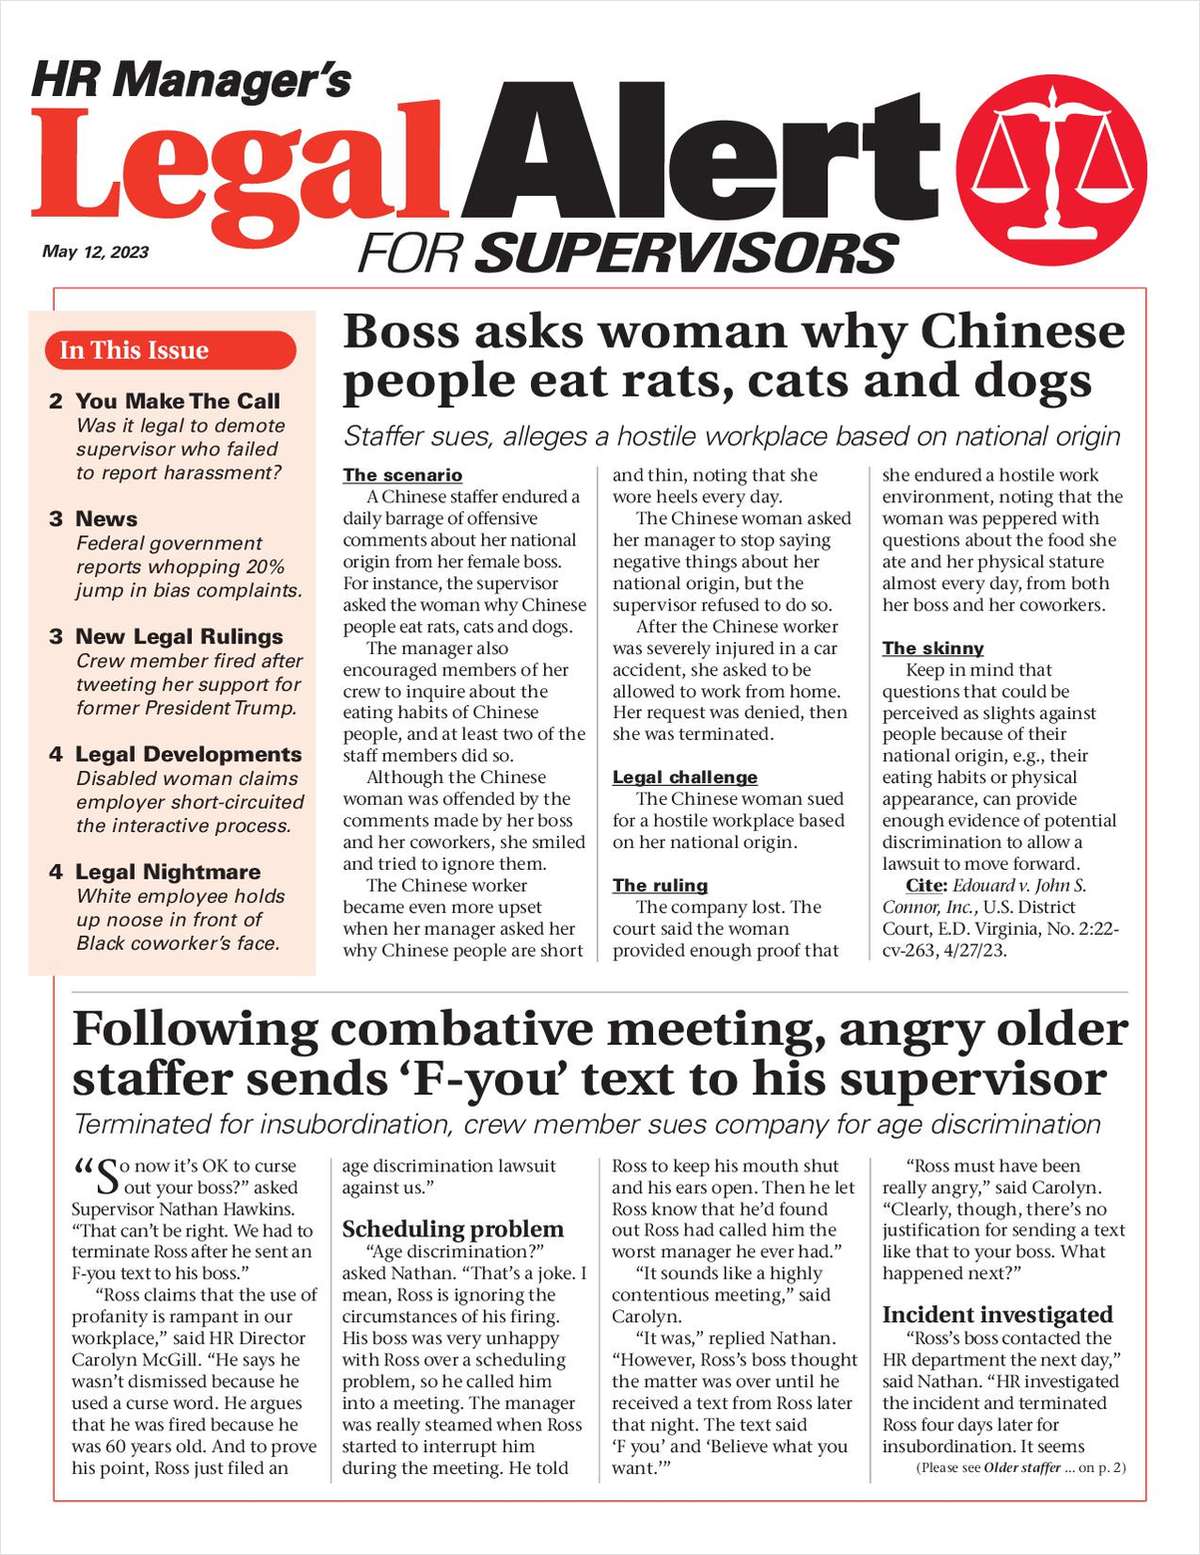 HR Manager's Legal Alert for Supervisors Newsletter: May 12 Edition